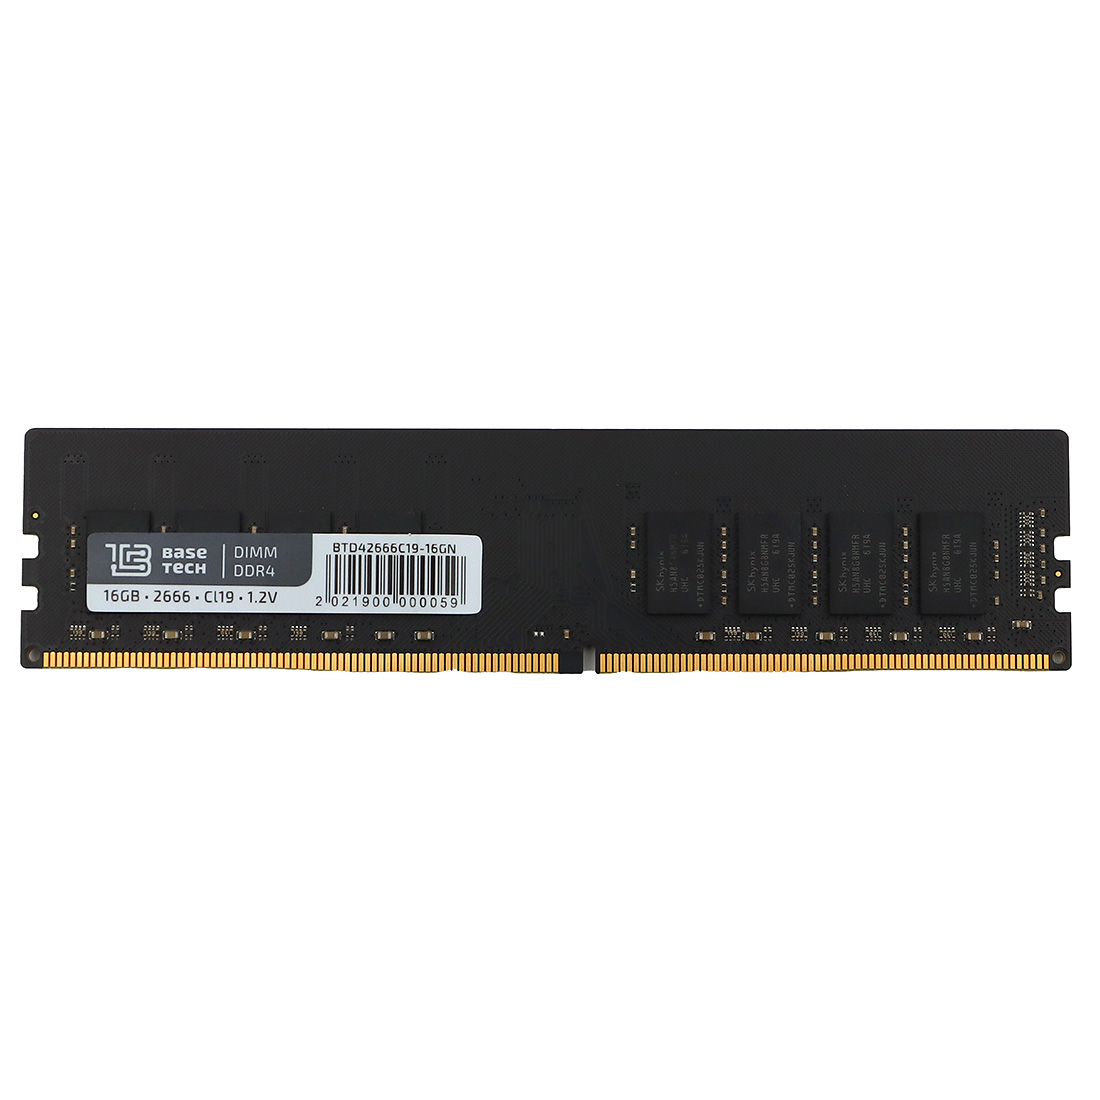 Комплект памяти DDR4 DIMM 32Gb (2x16Gb), 2666MHz, CL19, 1.2V, BaseTech (BTD42666C19-16GN-K2) Bulk (OEM)